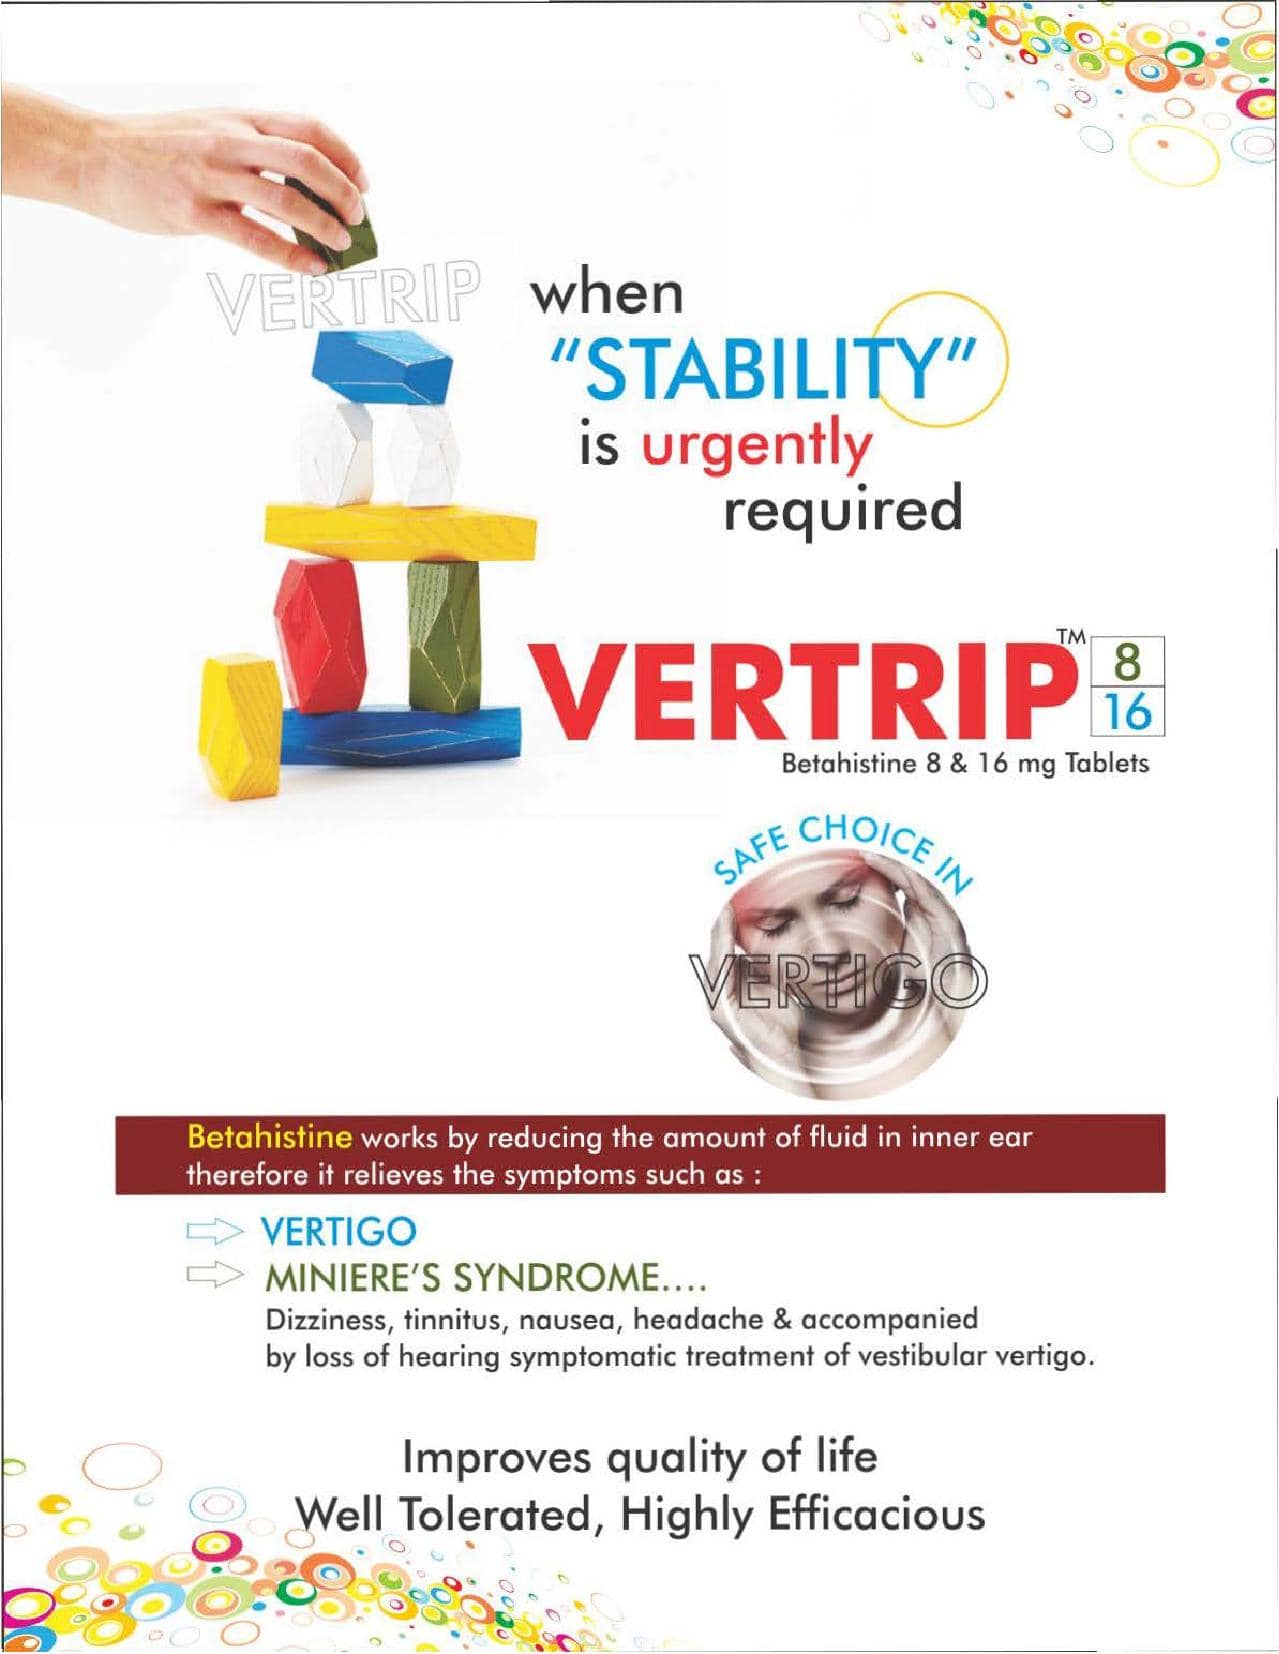 VERTRIP-8-16 - Visual Aid